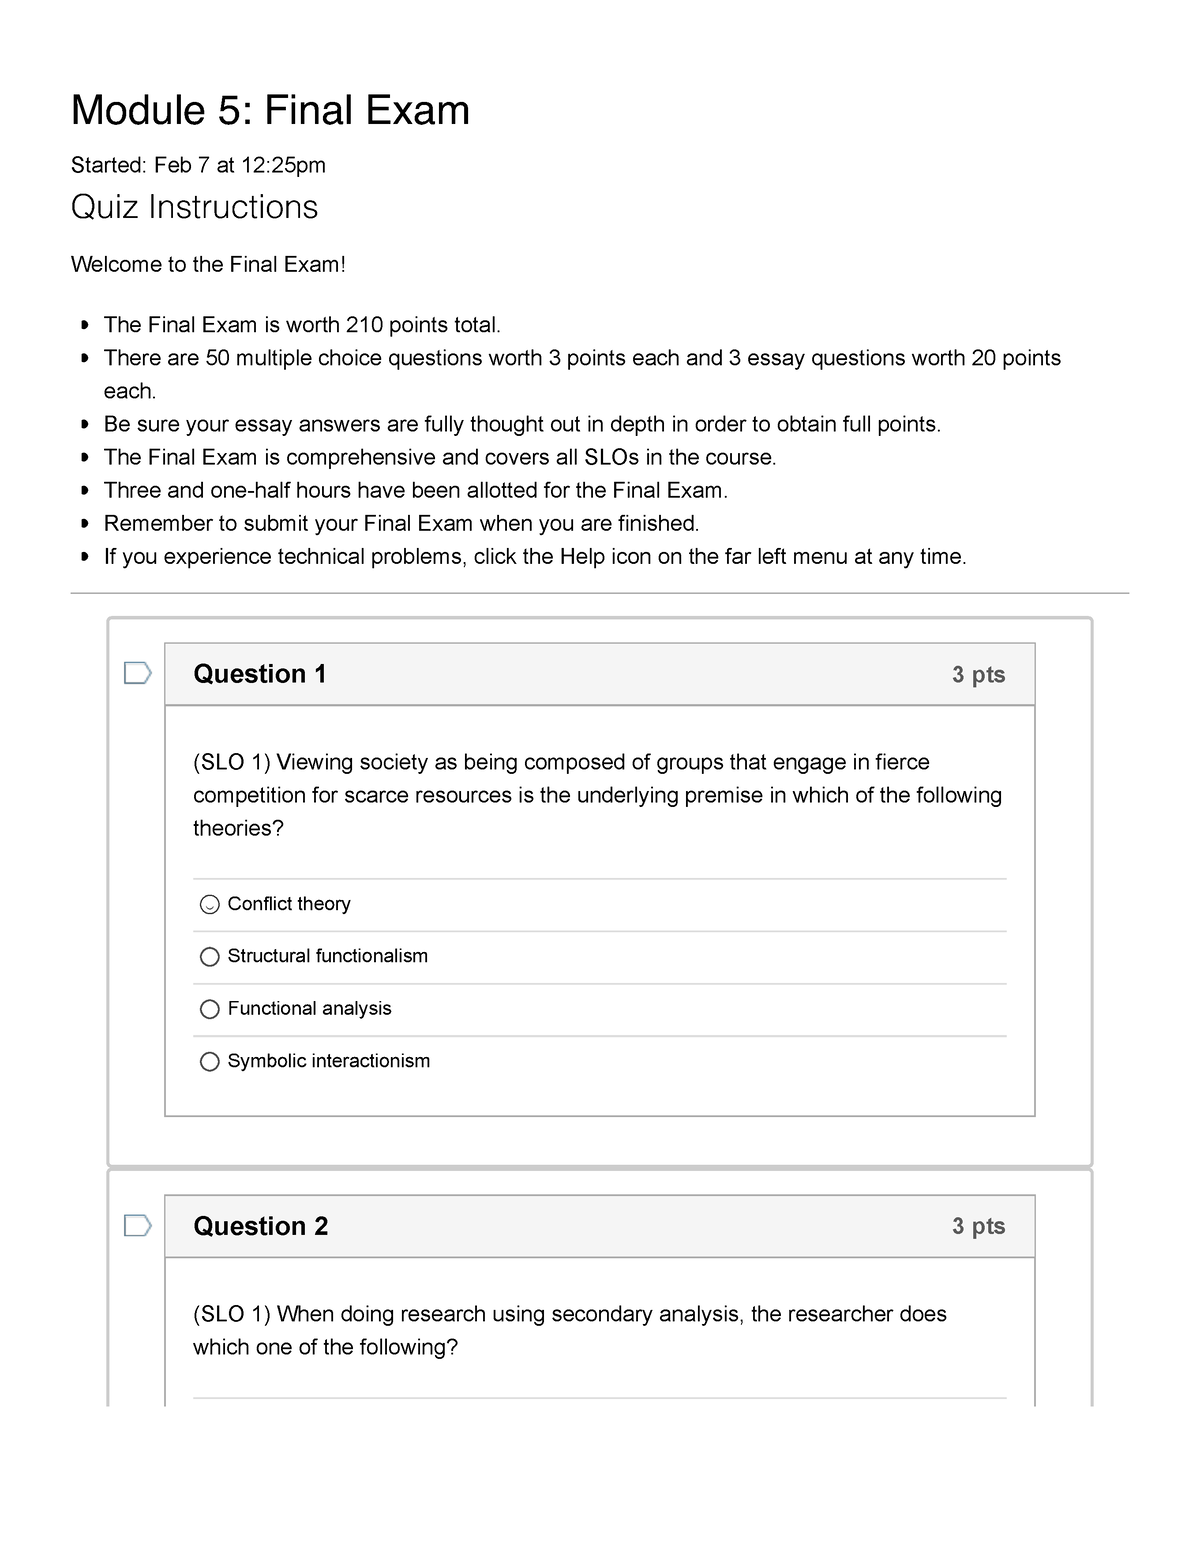 Quiz Module 5 Final Exam complete full - Module 5: Final Exam